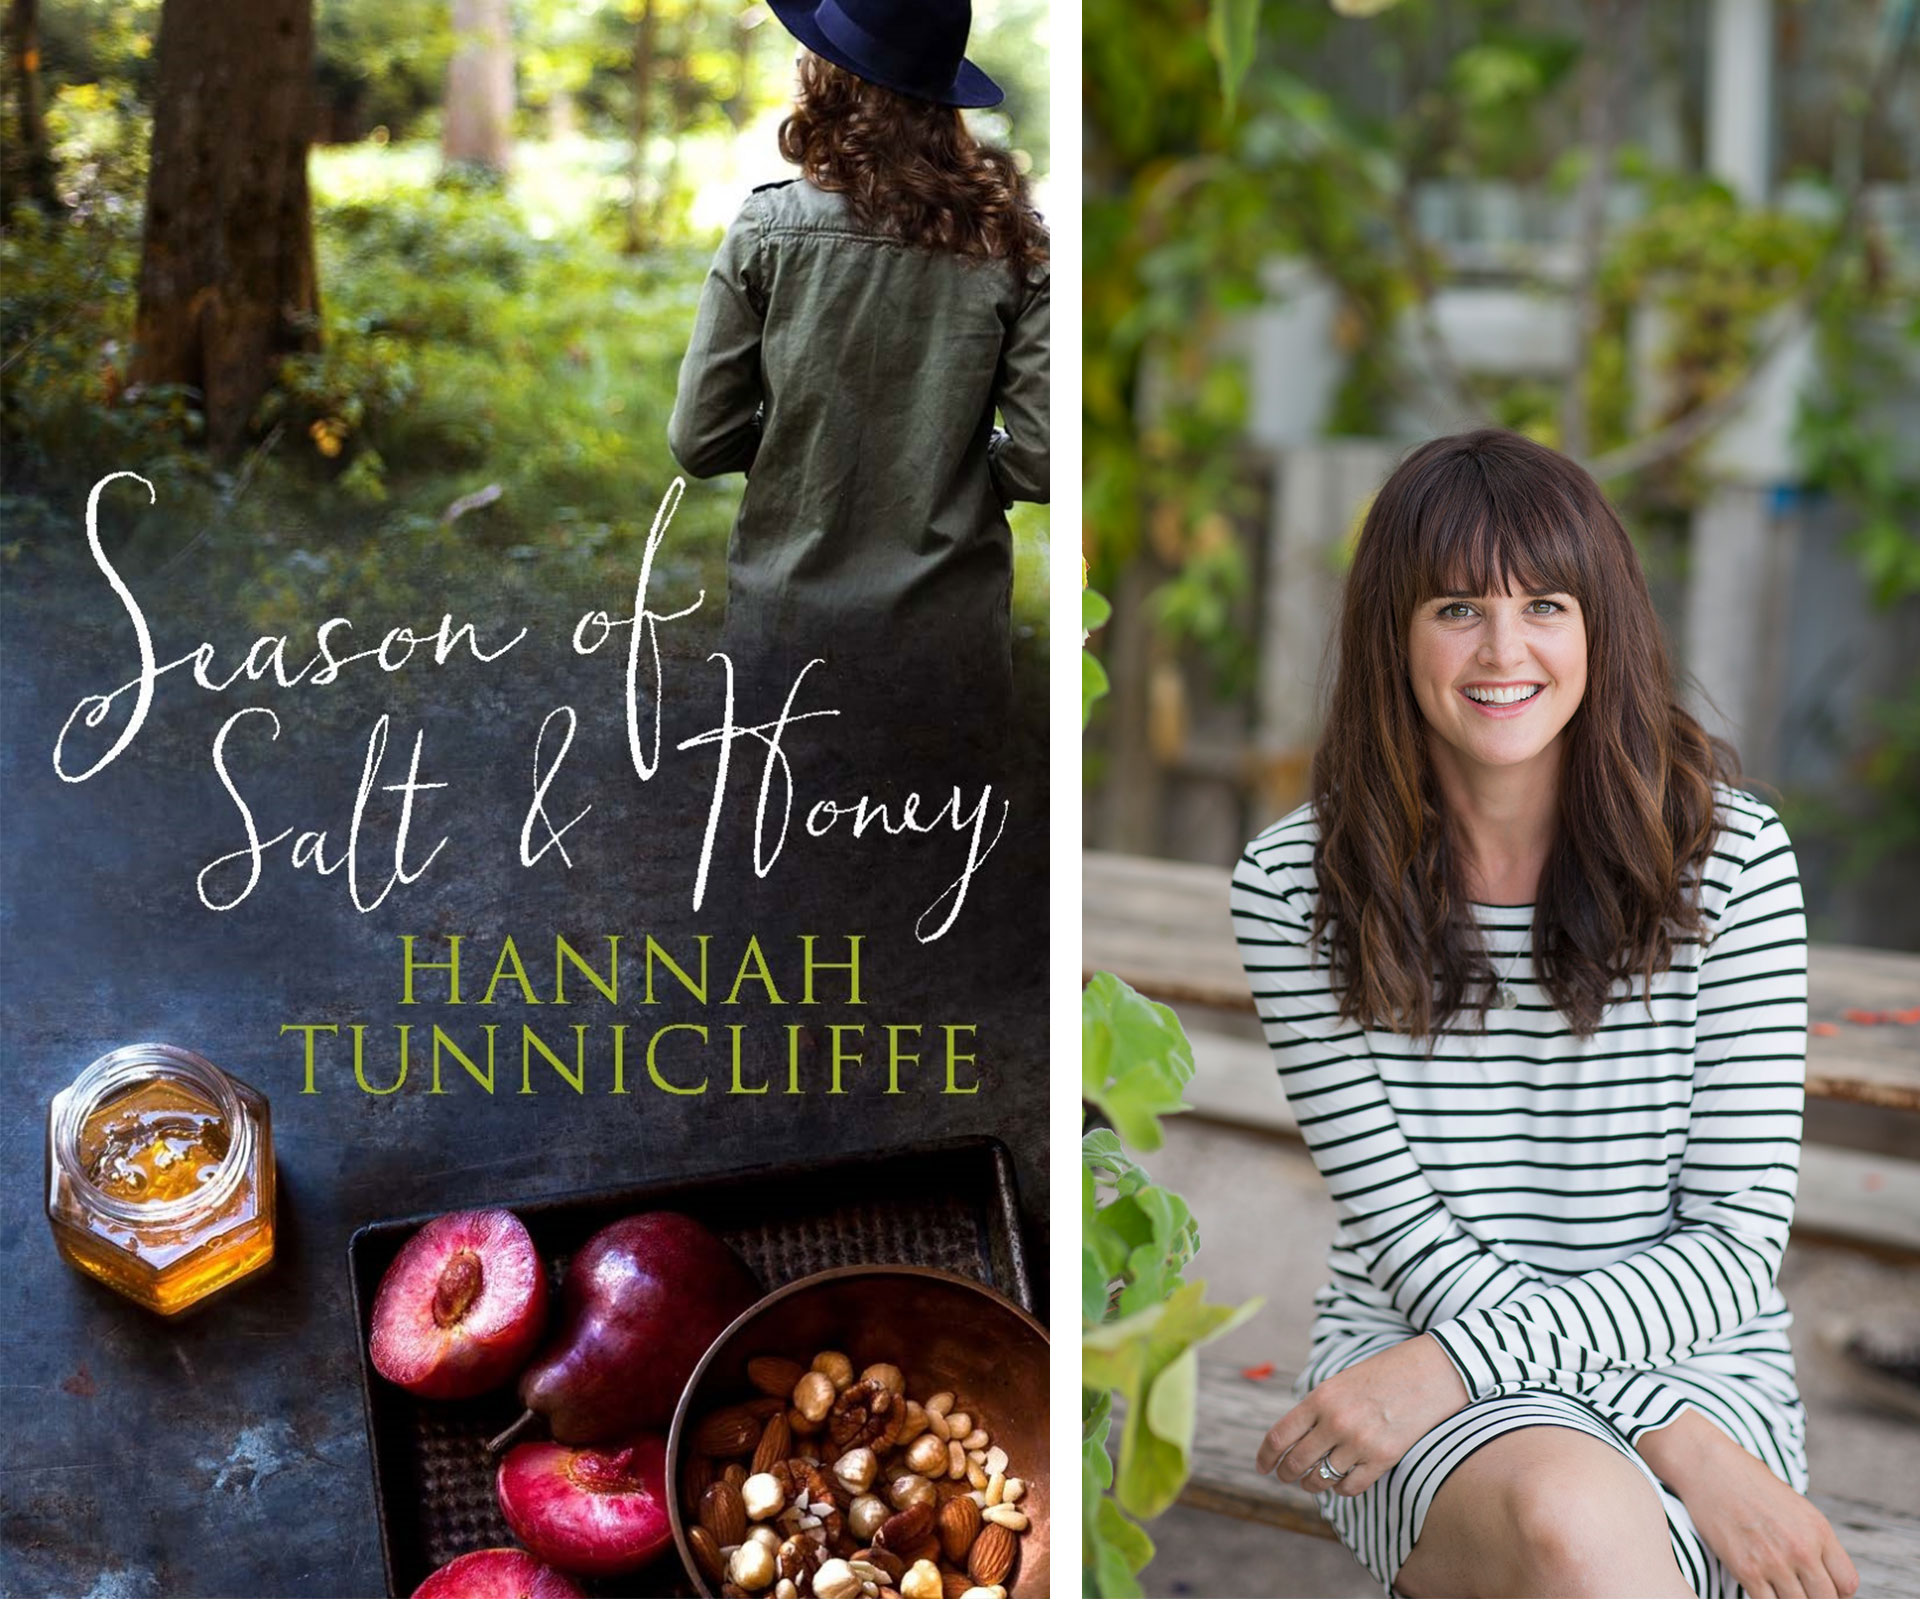 Season of salt and honey by Hannah Tunnicliffe